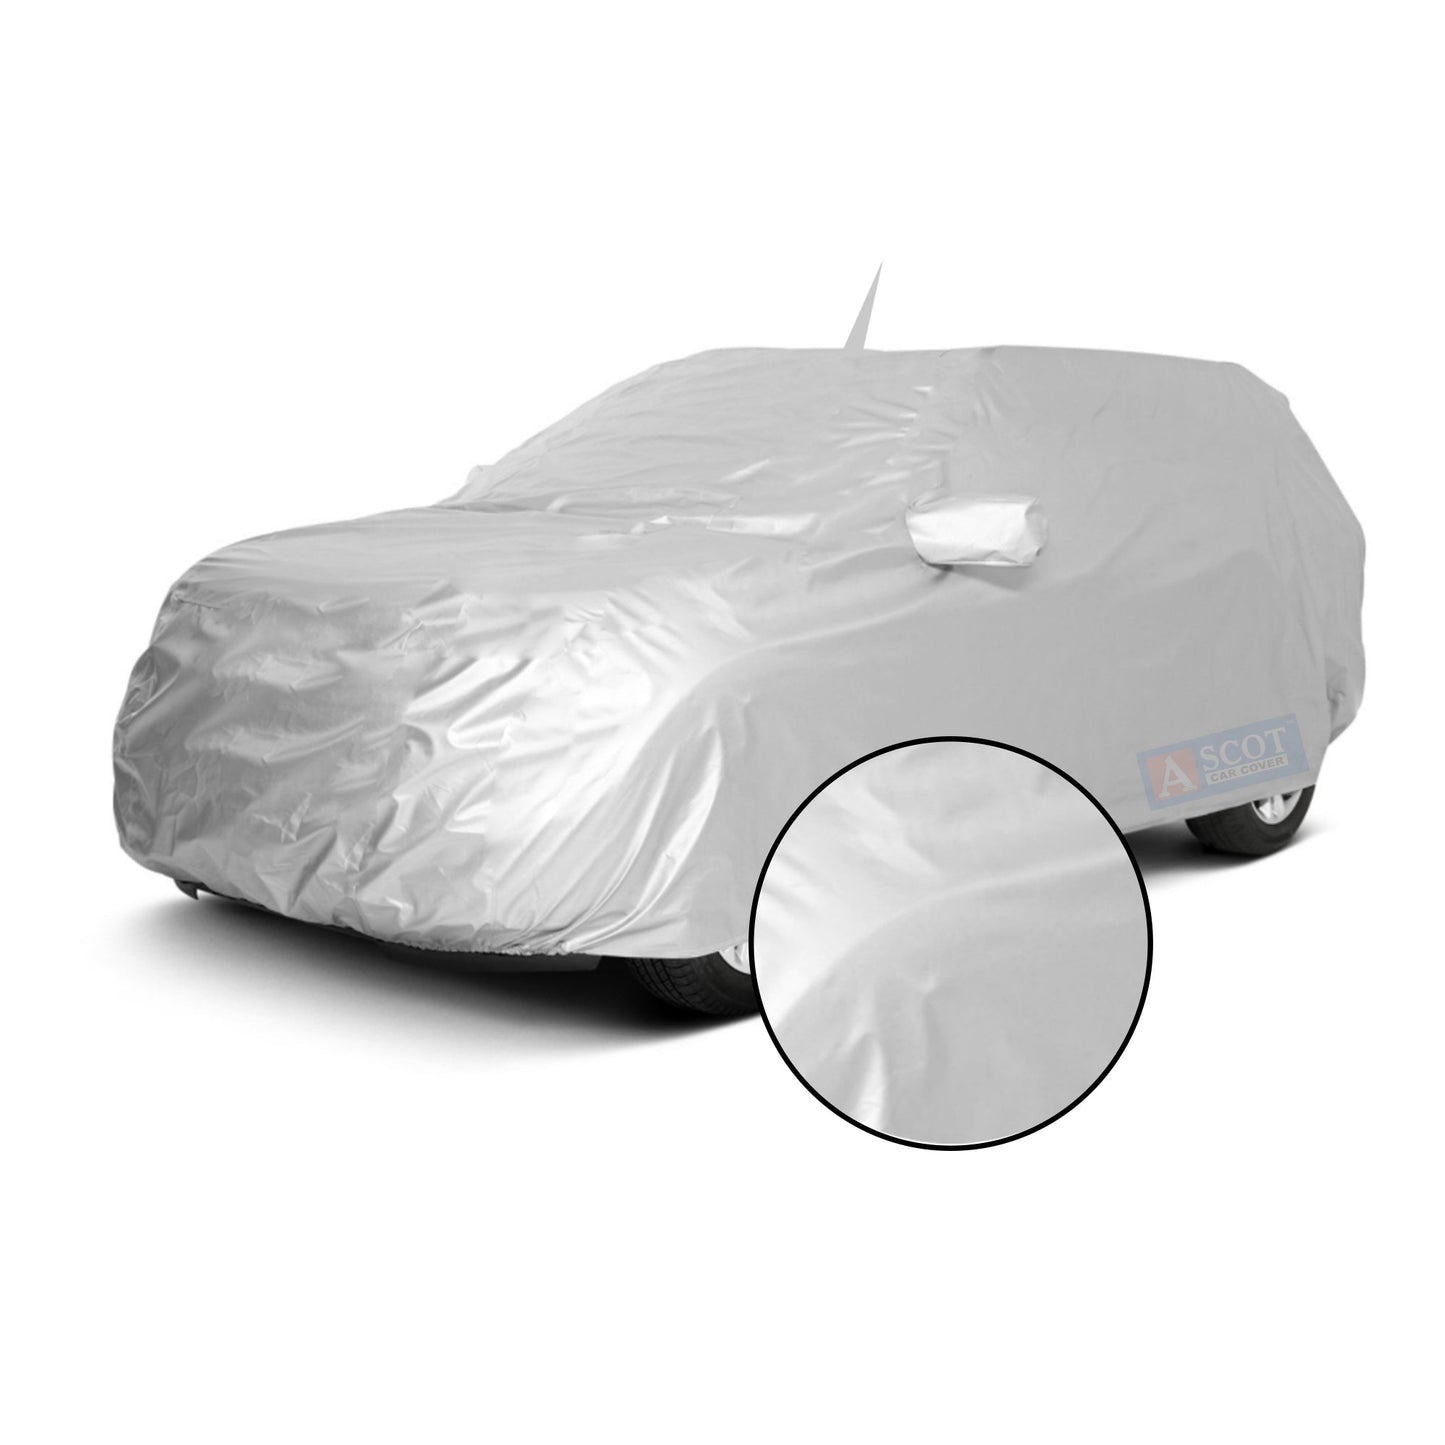 Ascot Mercedes-Benz C-Class Limousine 2021-2023 Model Car Body Cover Dust Proof, Trippel Stitched